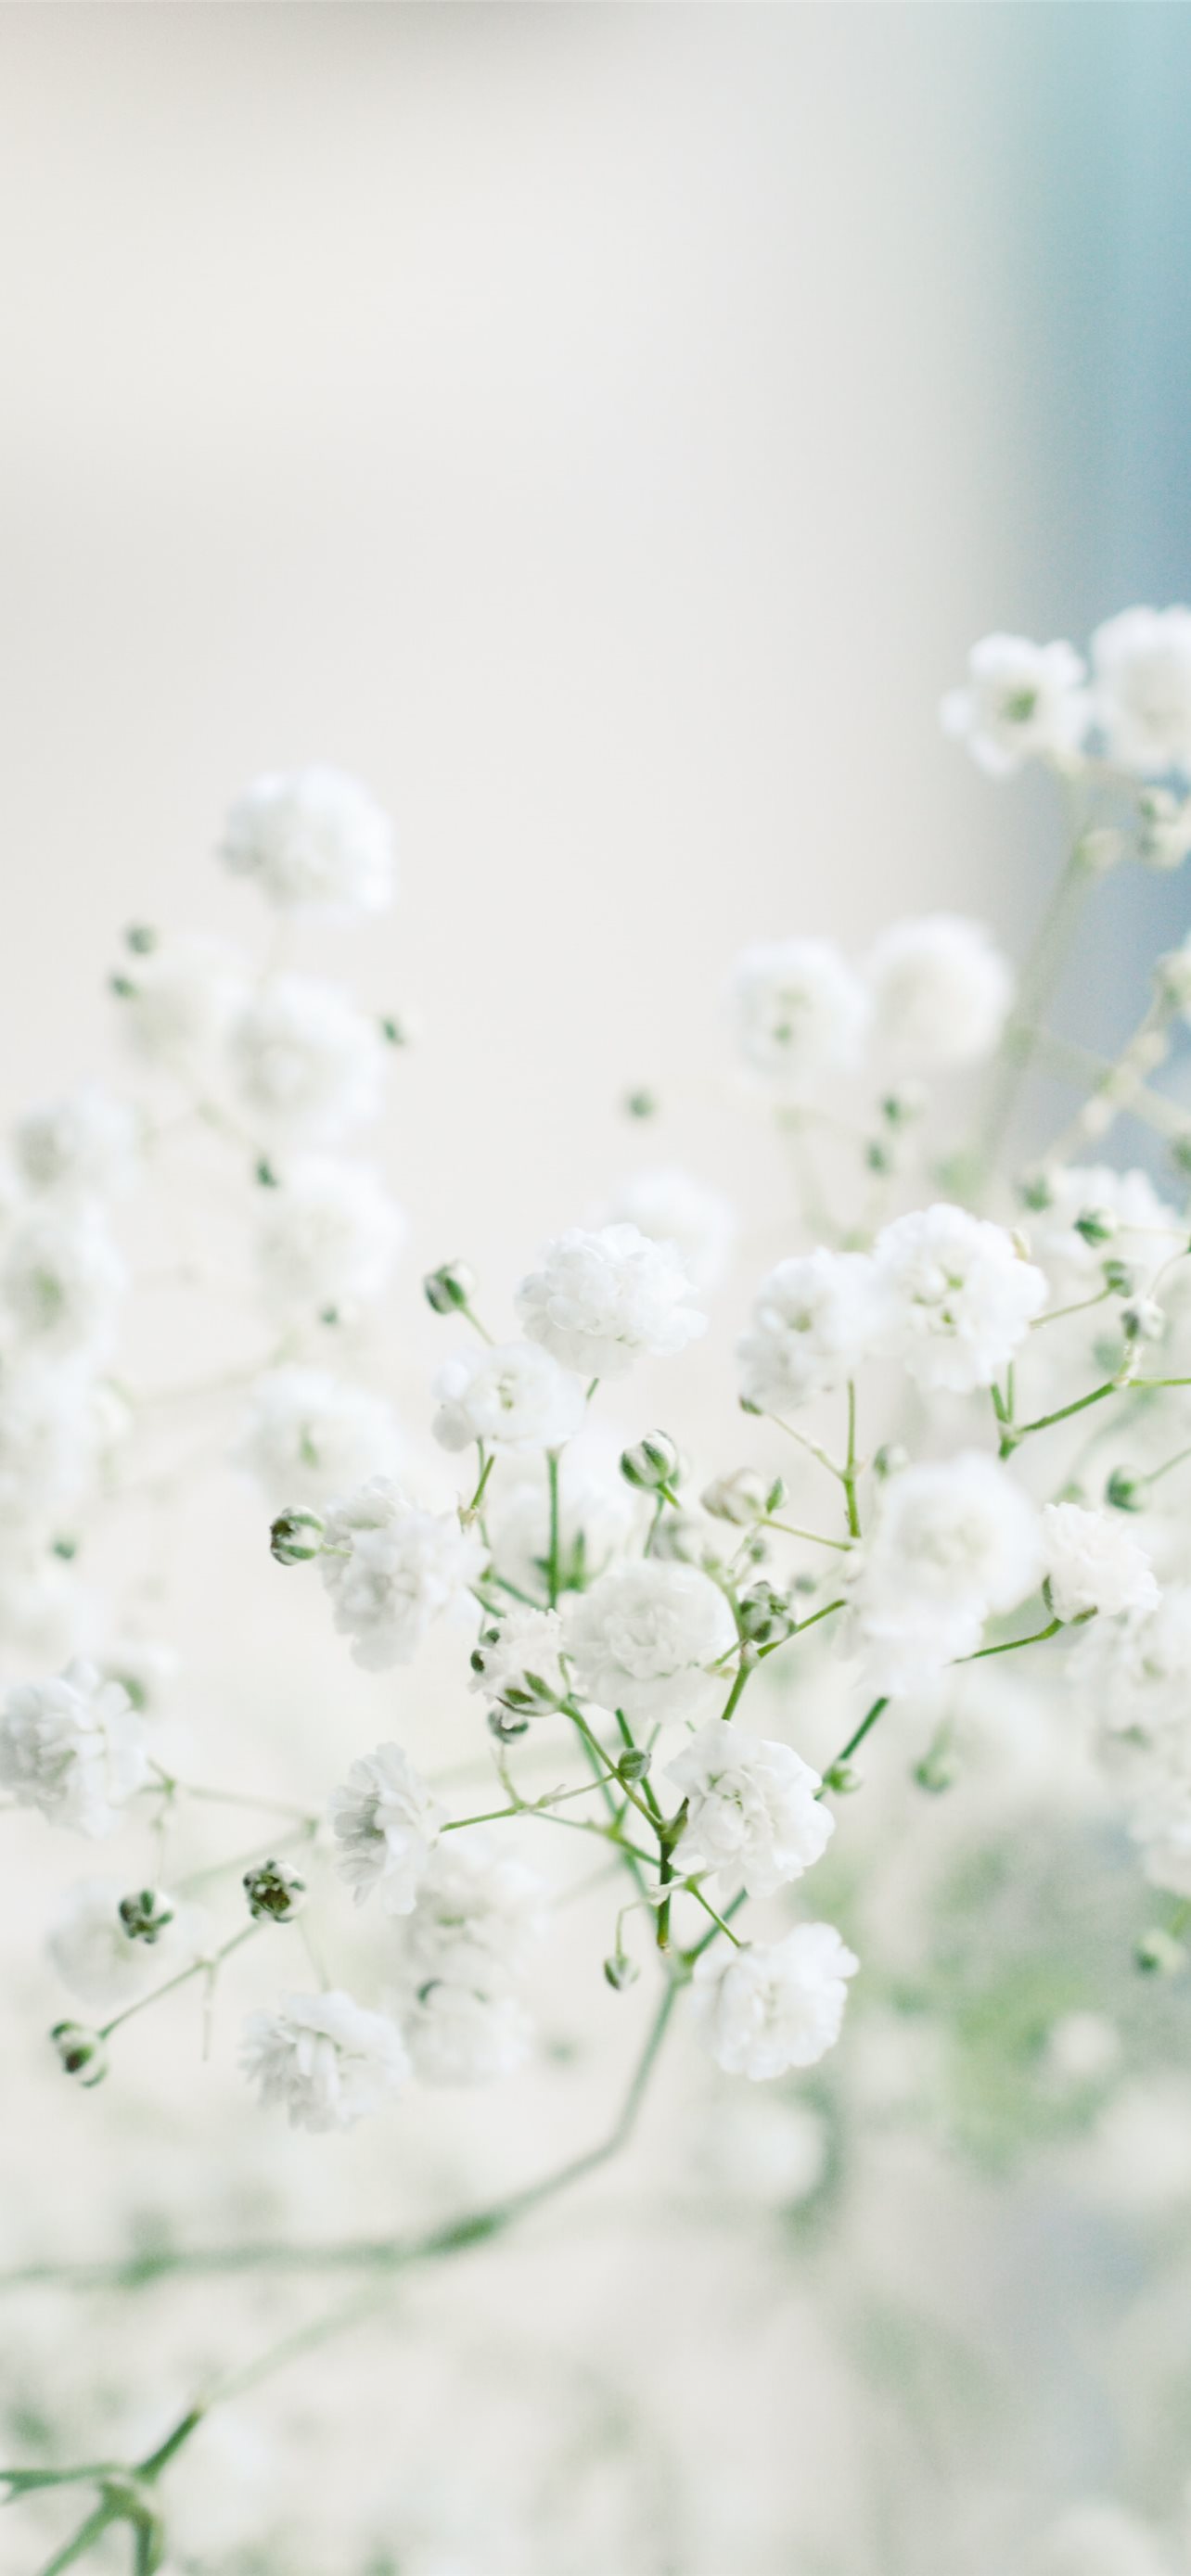 white flowers in macro lens iPhone wallpaper 